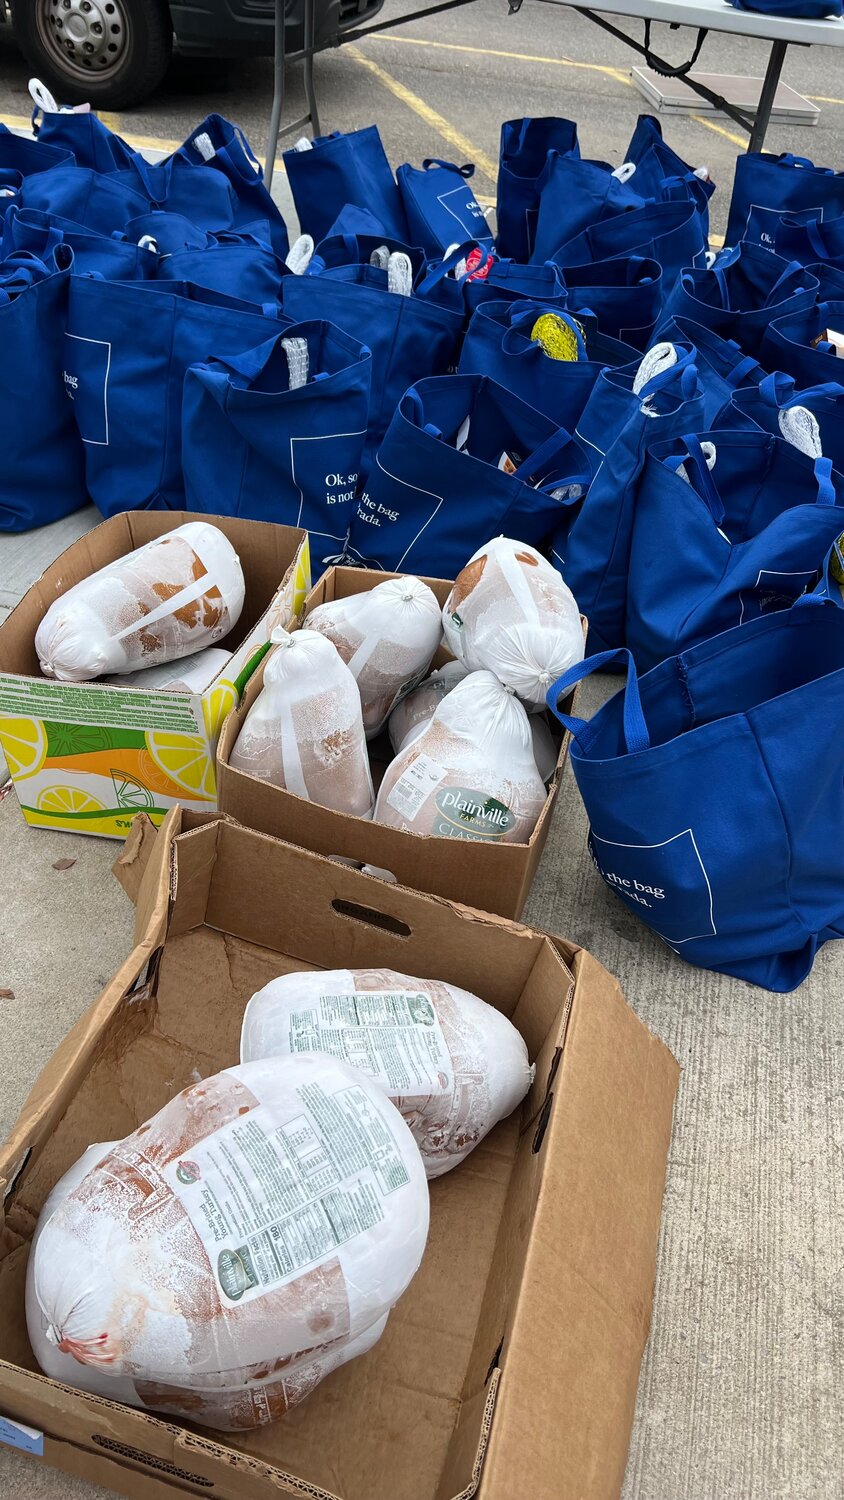 The North Shore Hispanic Chamber of Commerce donated many turkeys to the community.